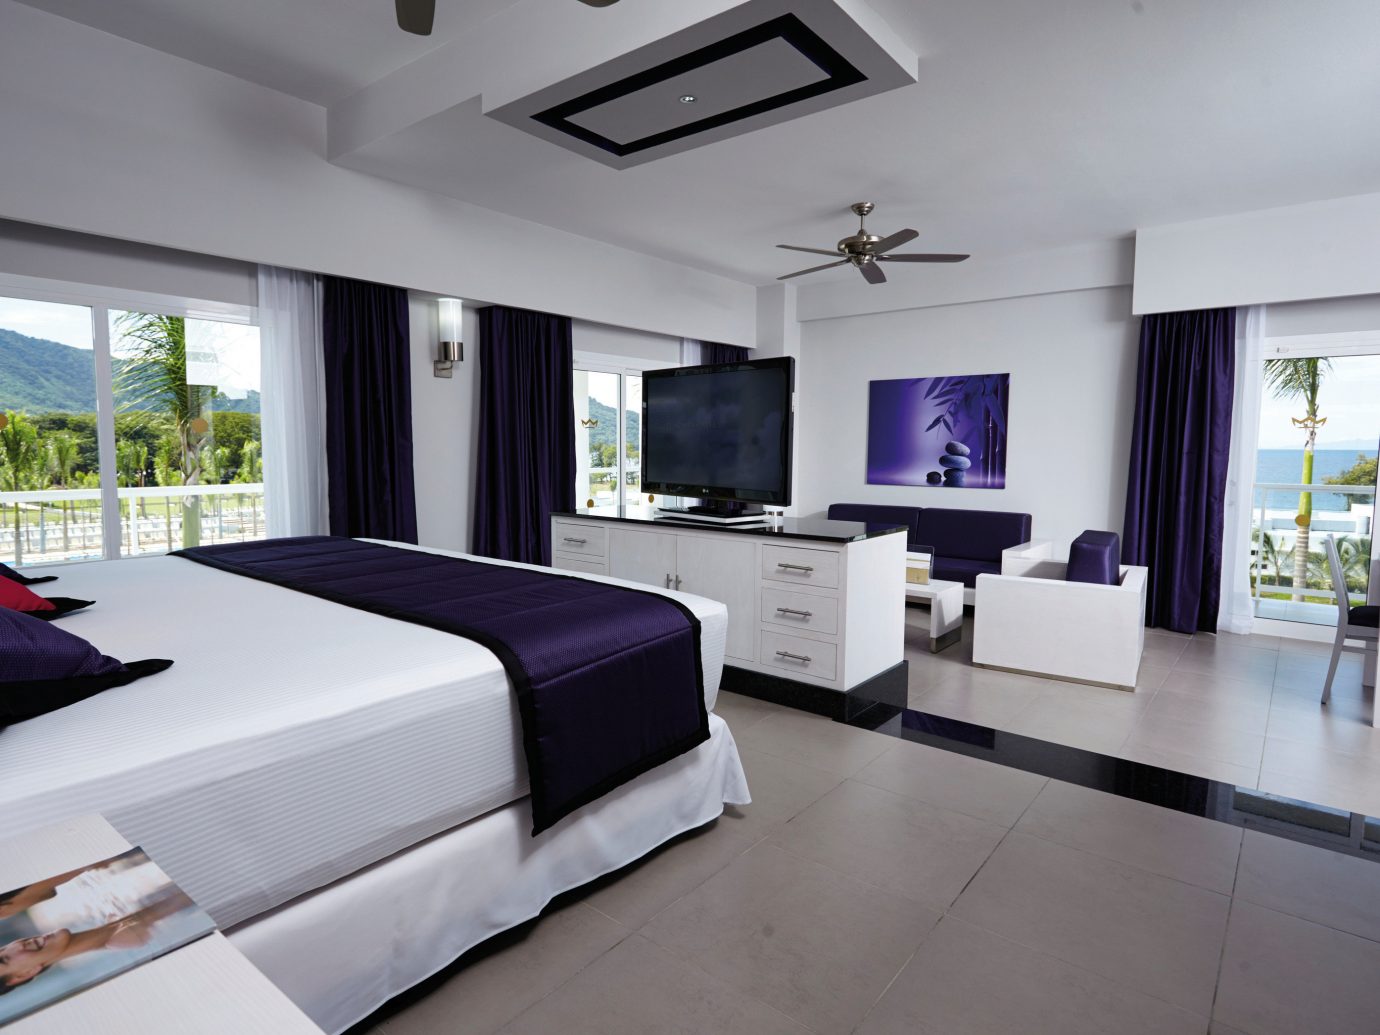 Bedroom at Hotel Riu Palace Costa Rica, Guanacaste